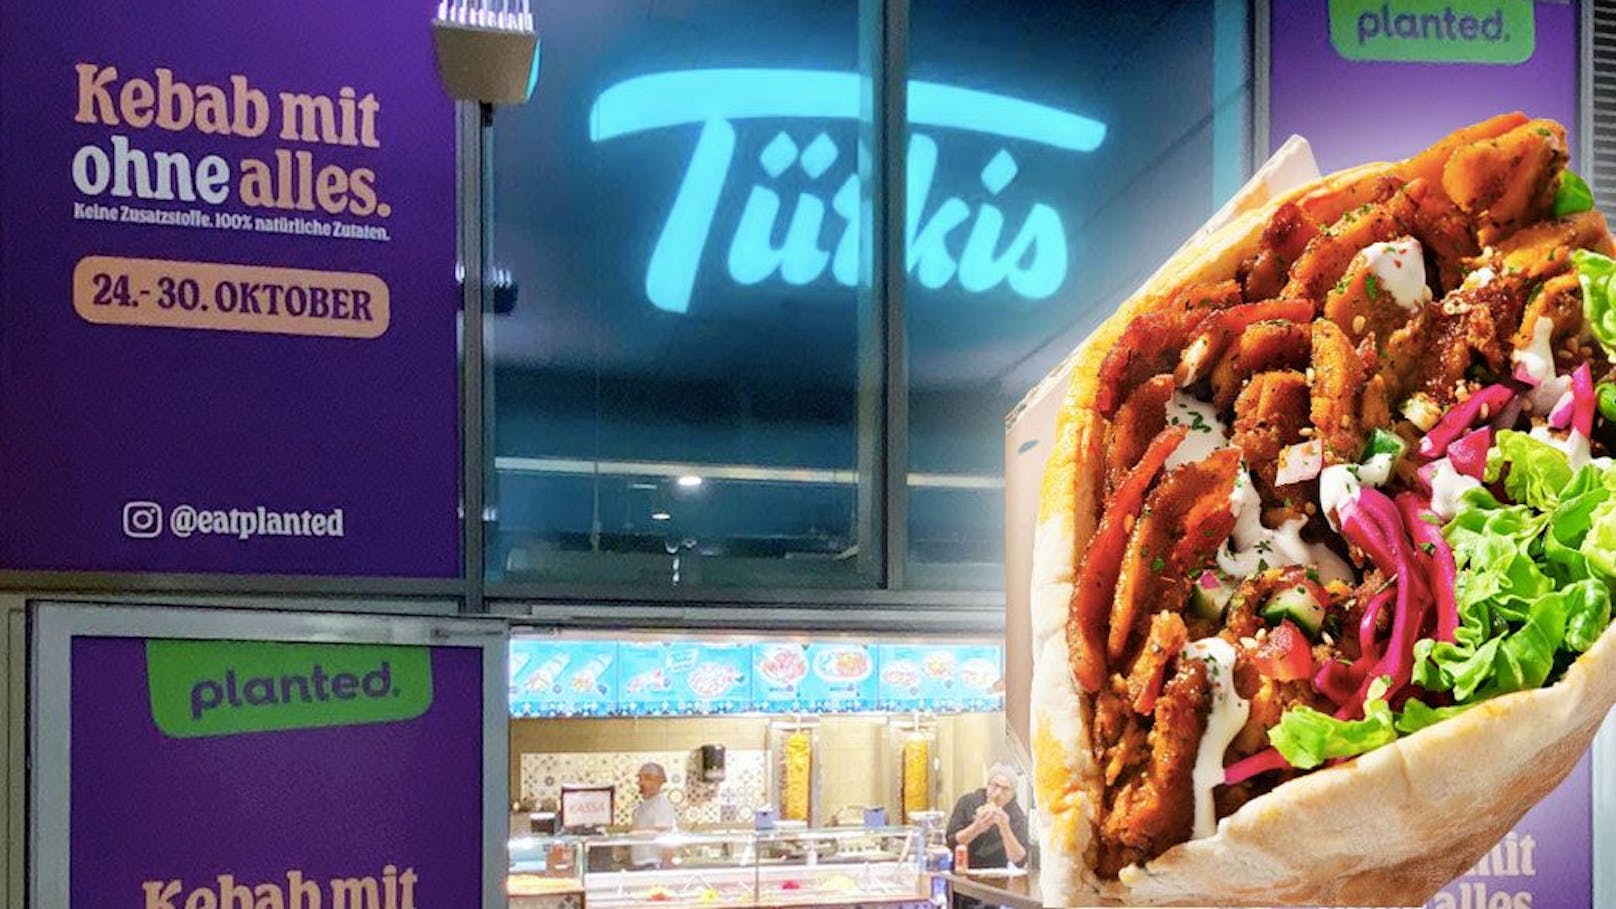 Die Fast-Food-Kette Türkis wagt den Versuch mit veganem Kebab.